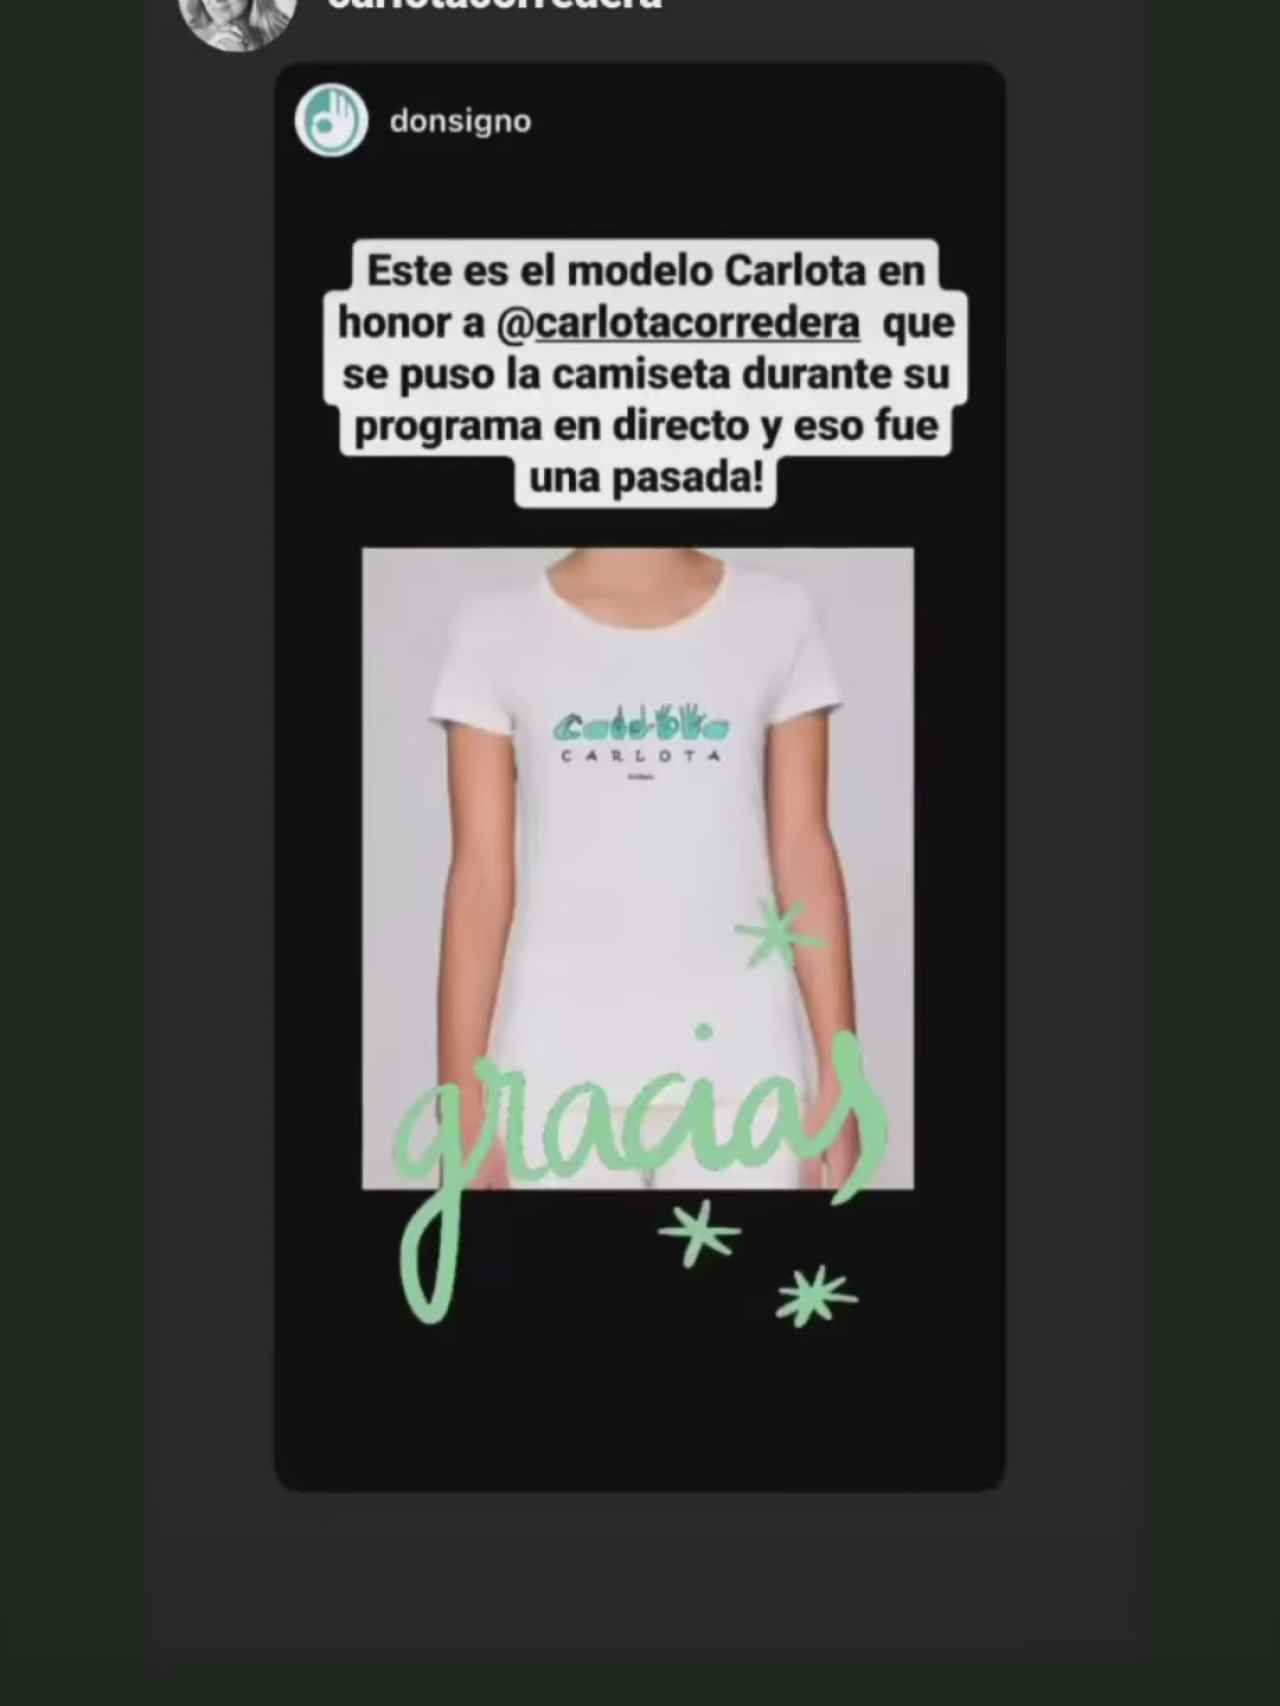 Captura de la camiseta en honor a Carlota Corredera de Don Signo.